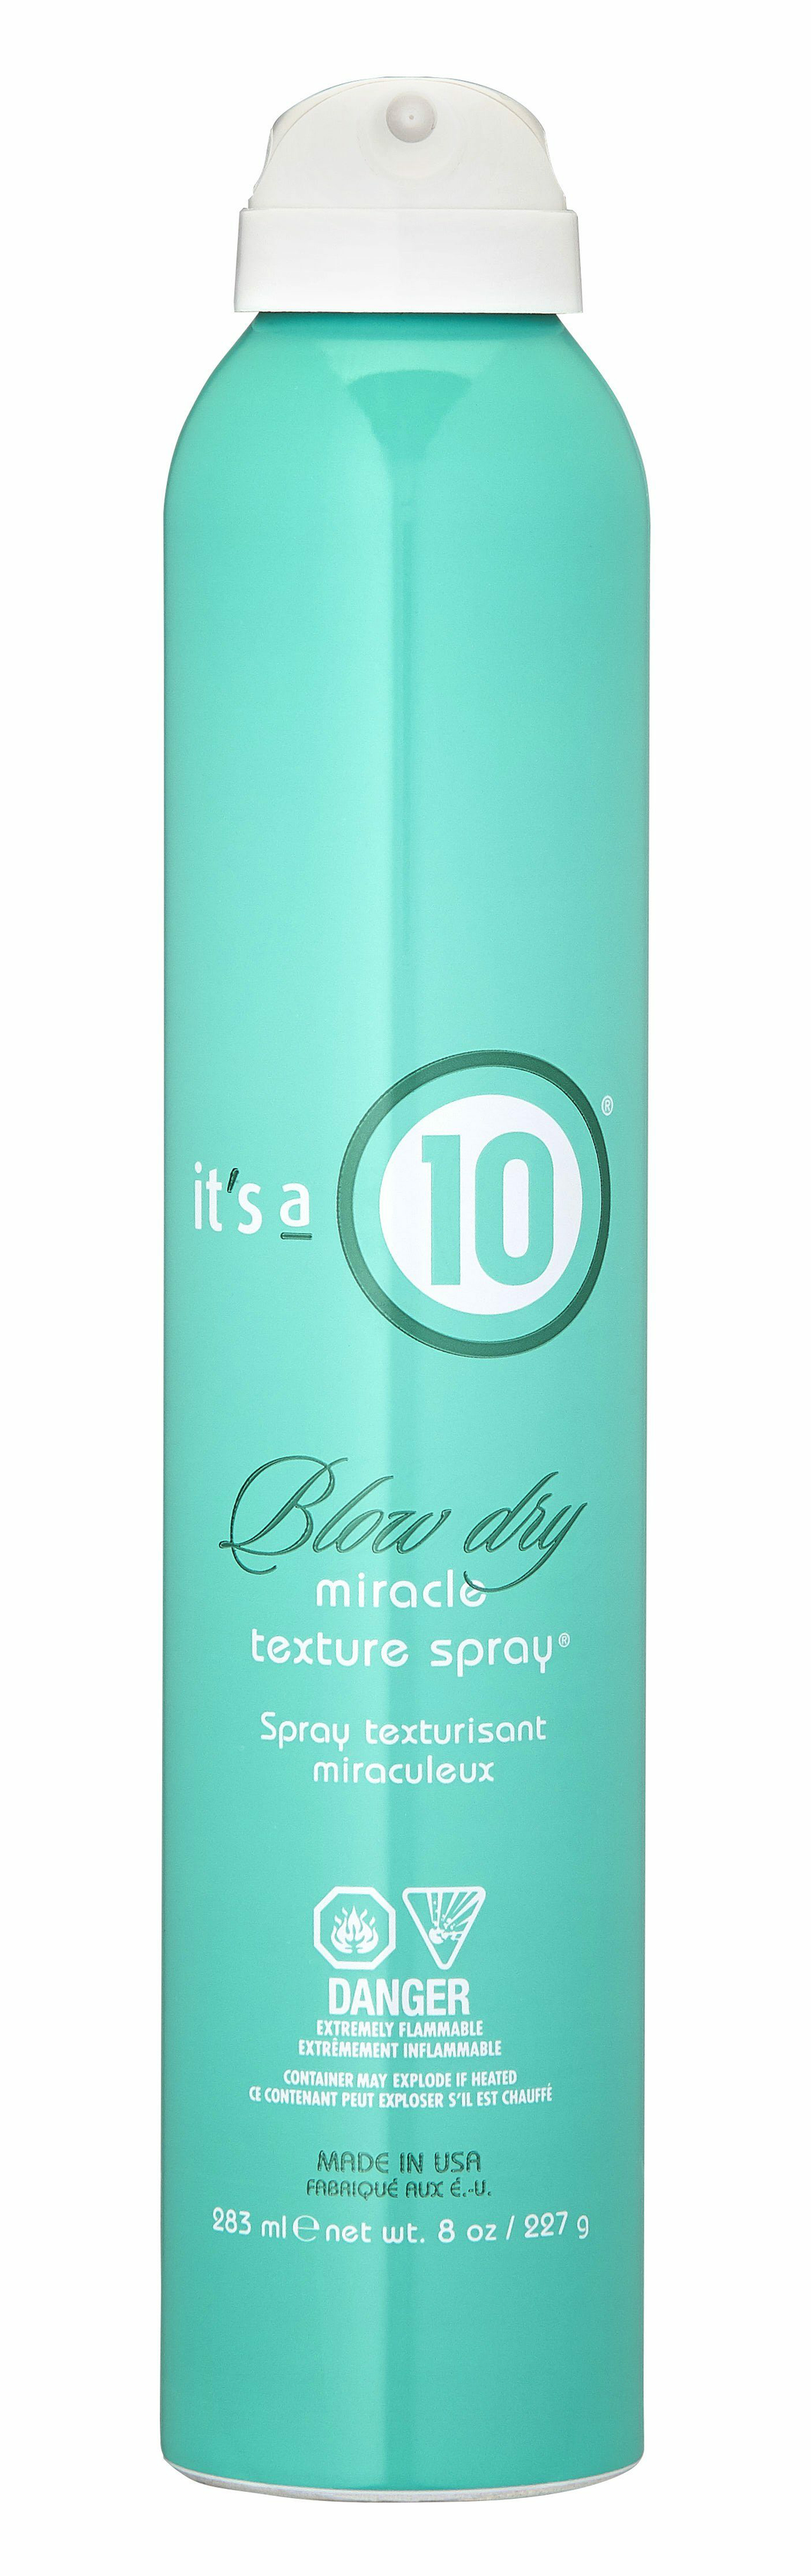 It's A 10 Blow dry Texture Spray 8oz